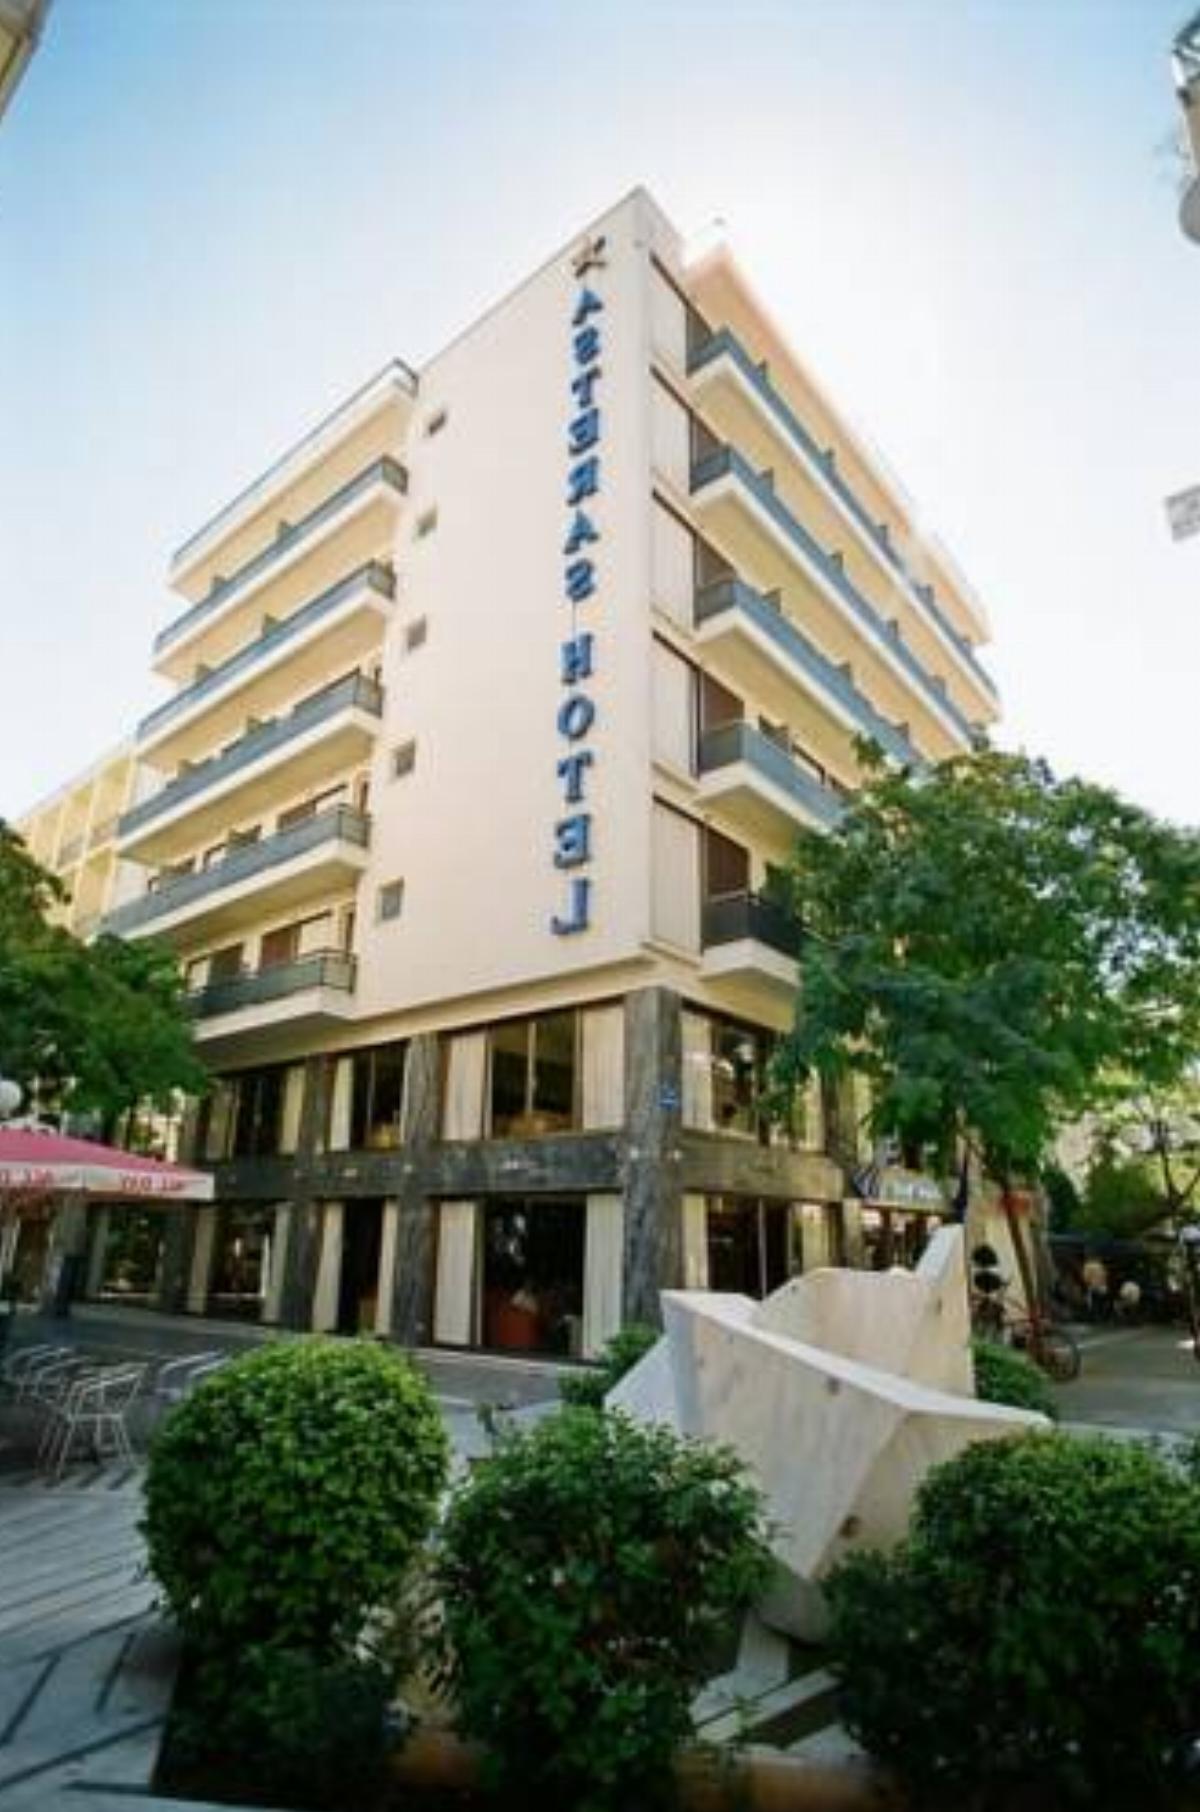 Asteras Hotel Larissa Hotel Larisa Greece